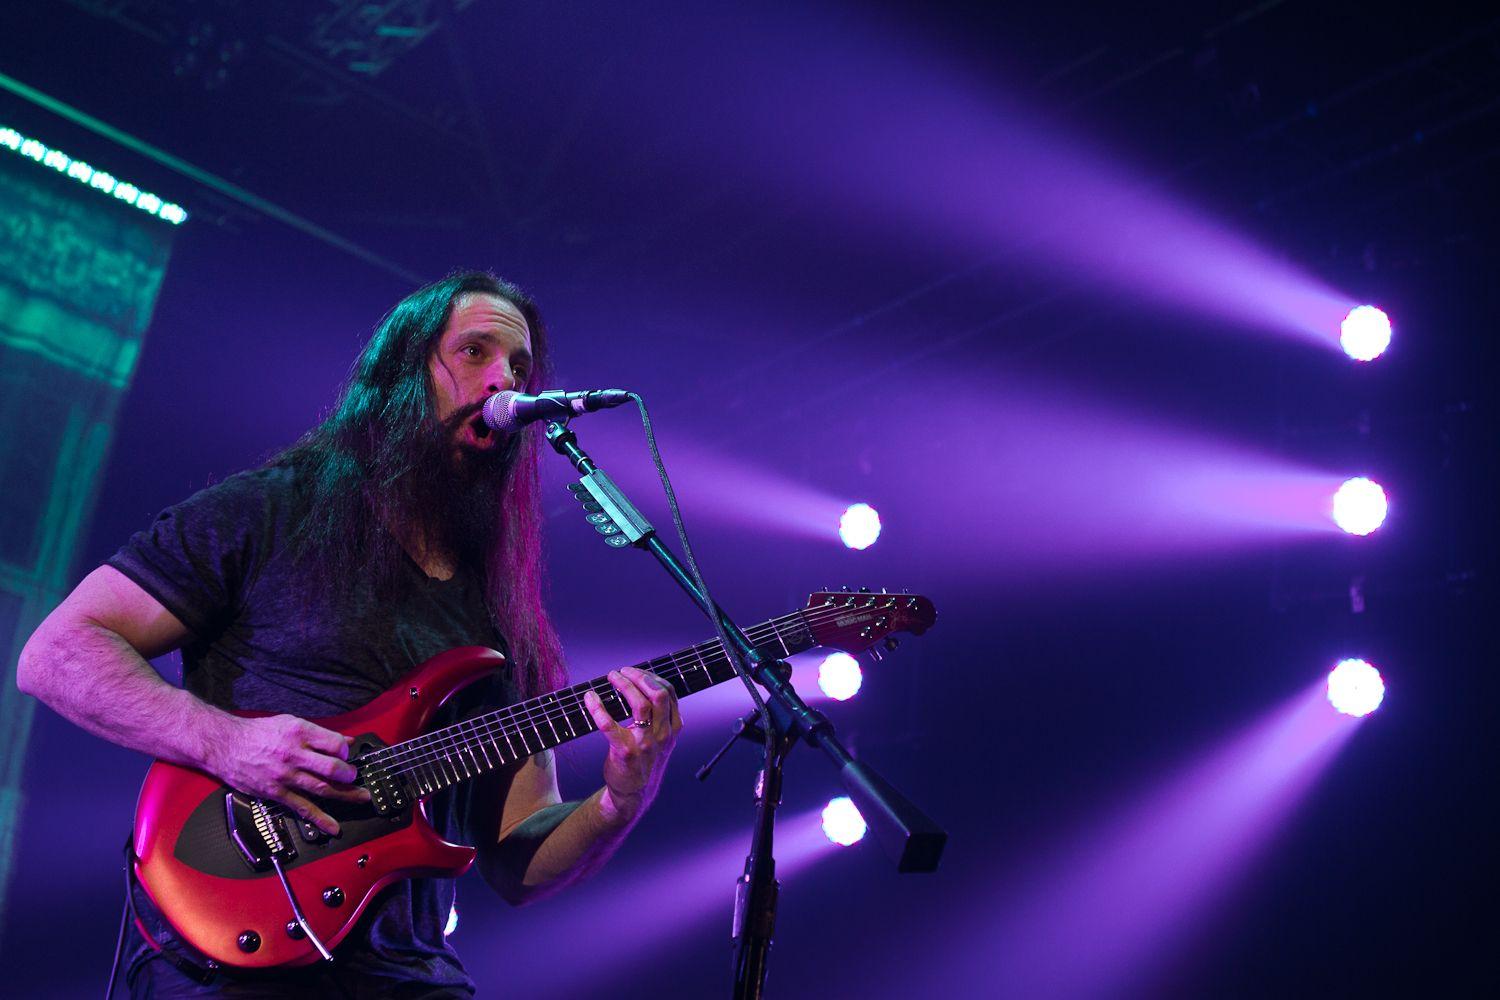 John Petrucci of Dream Theater 2014 at Mitsubishi Electric Hall